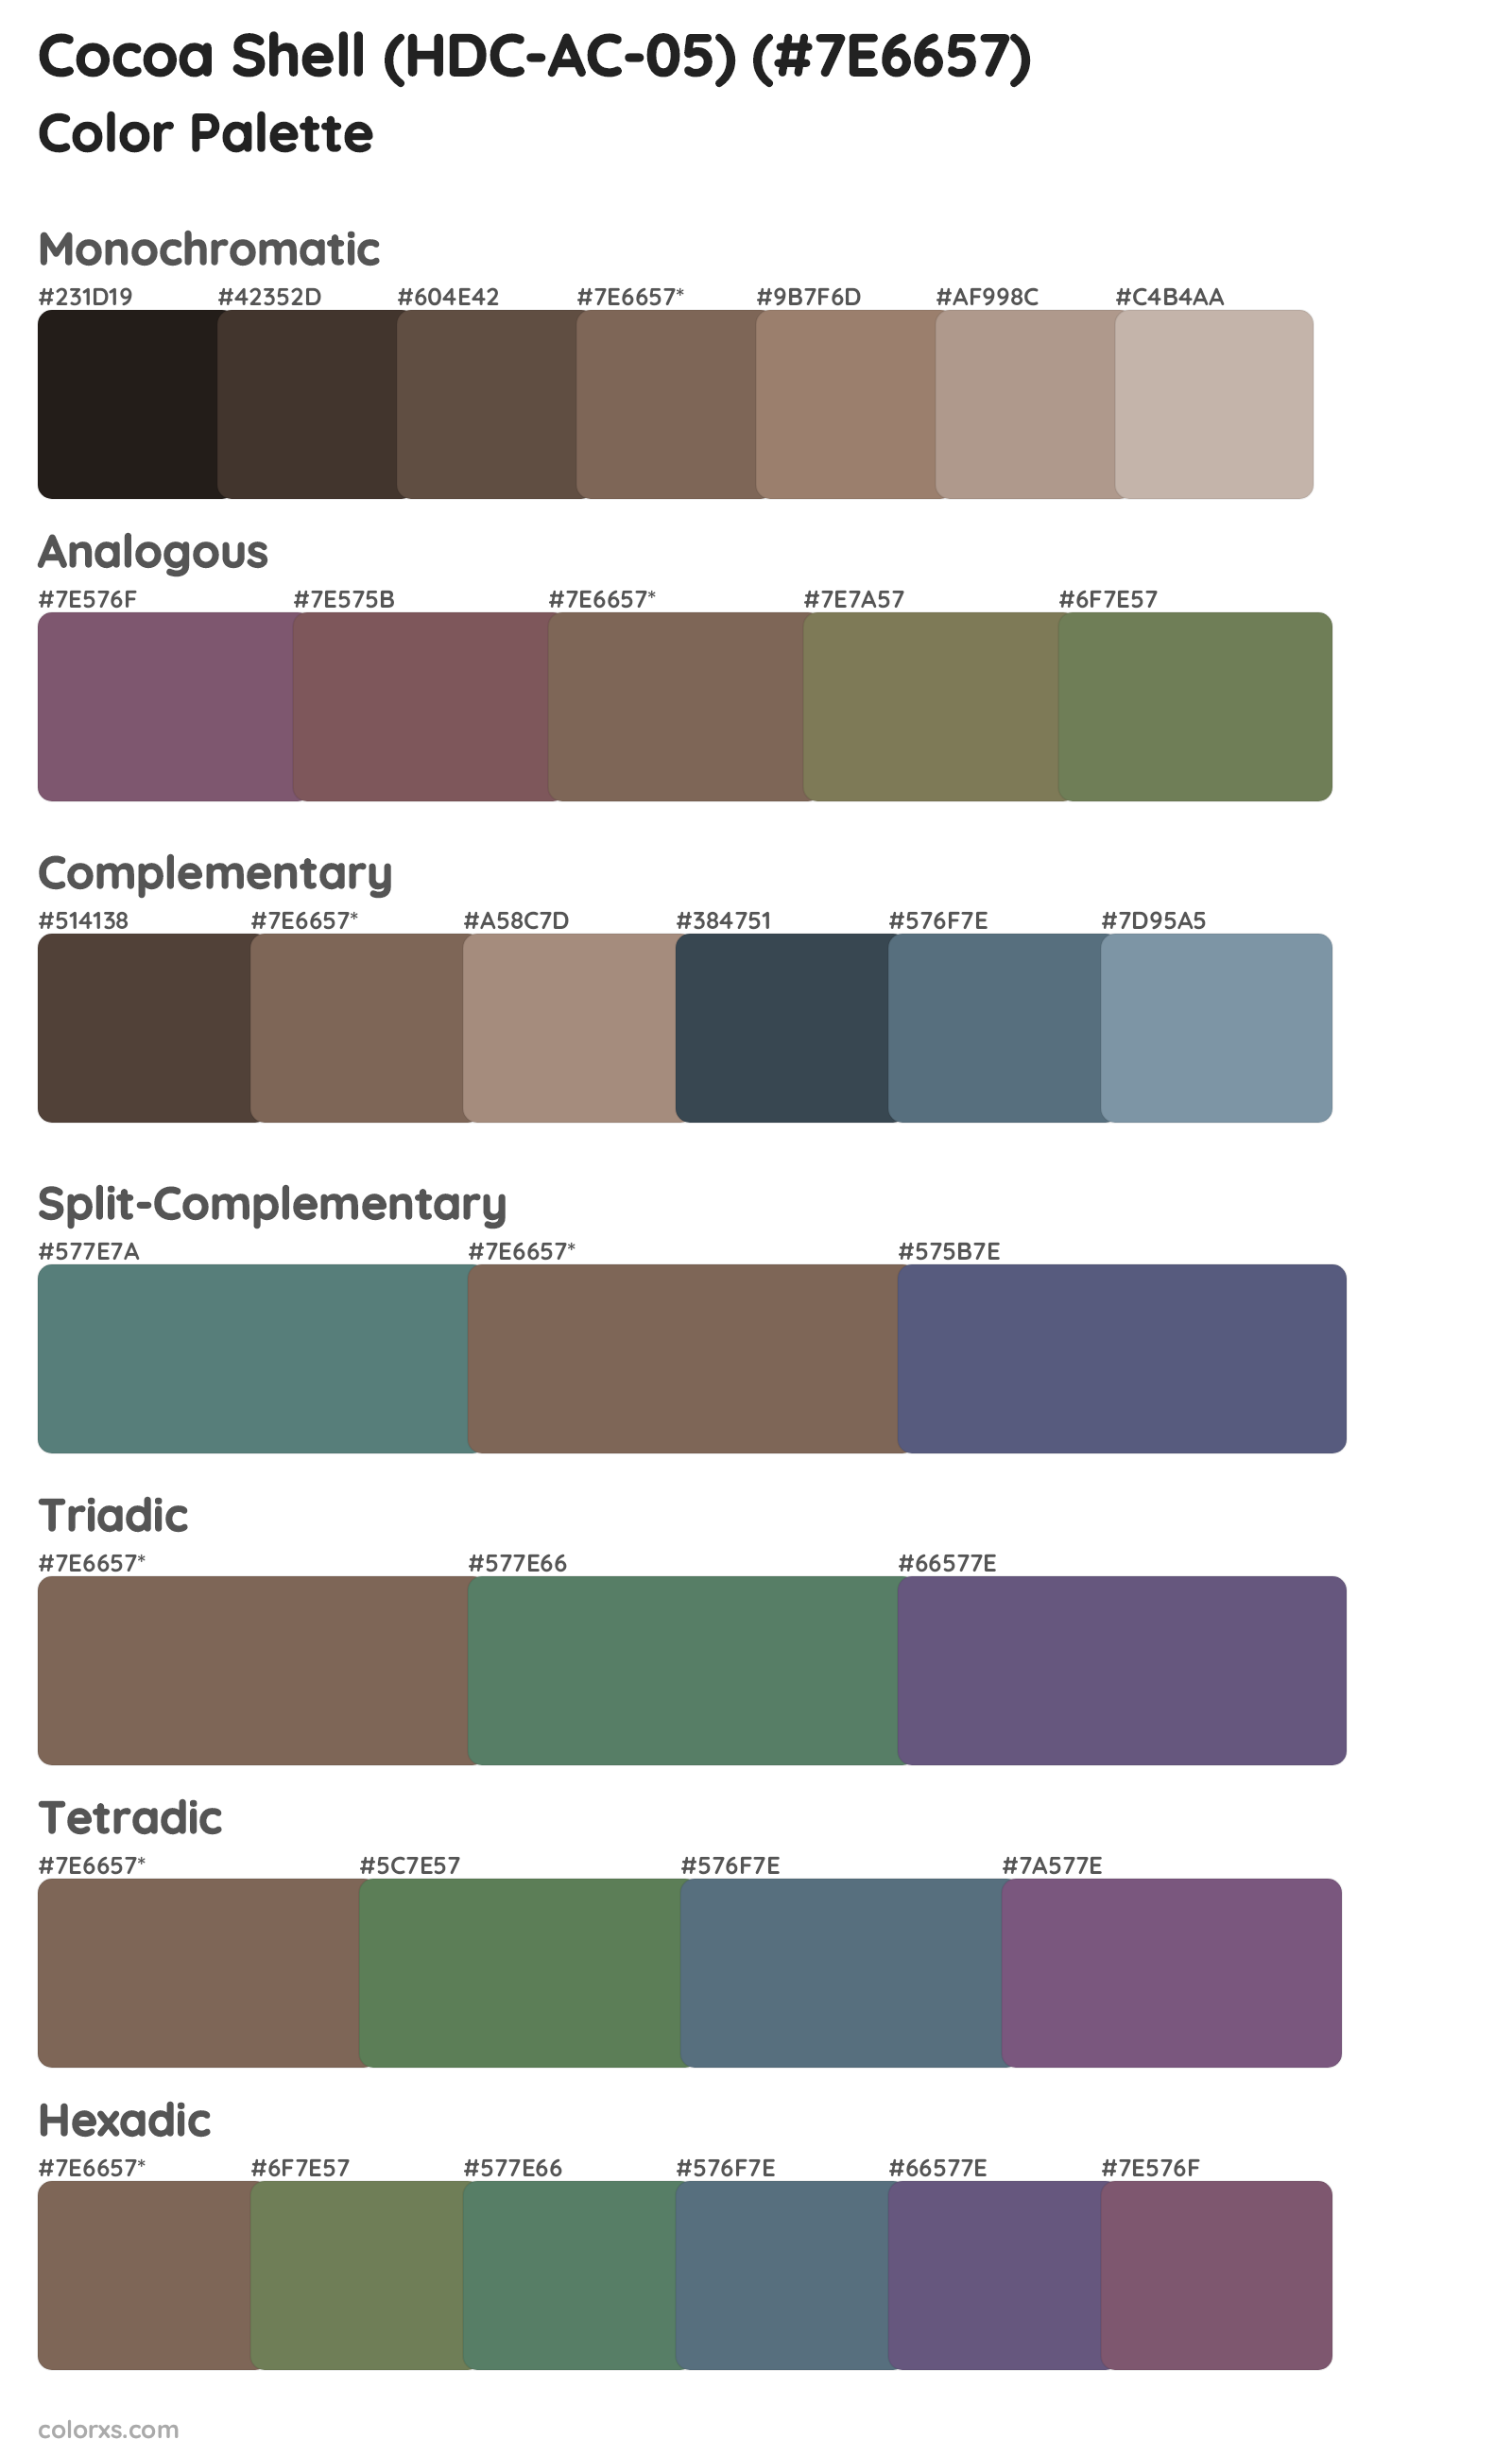 Cocoa Shell (HDC-AC-05) Color Scheme Palettes